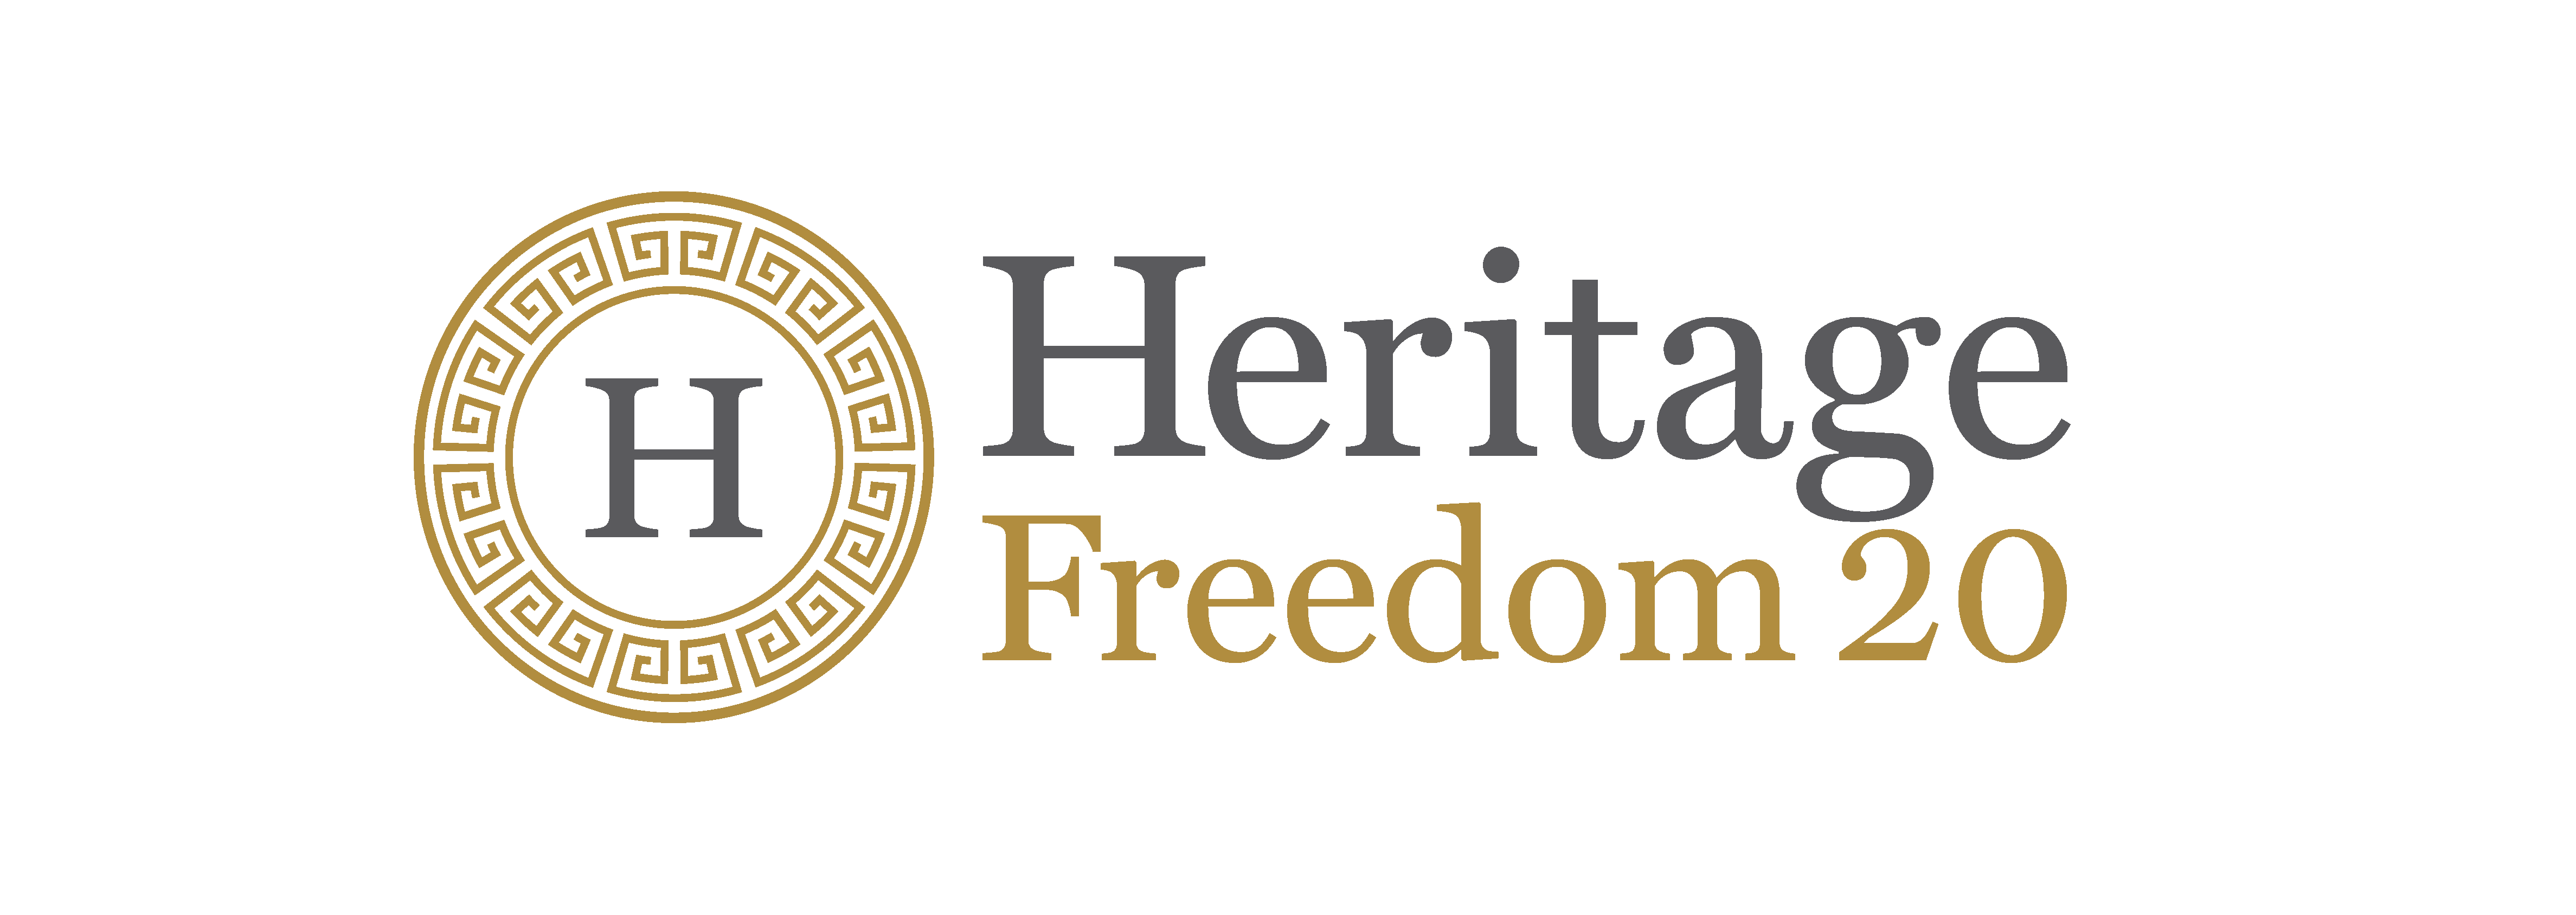 Heritage Freedom 20 Range